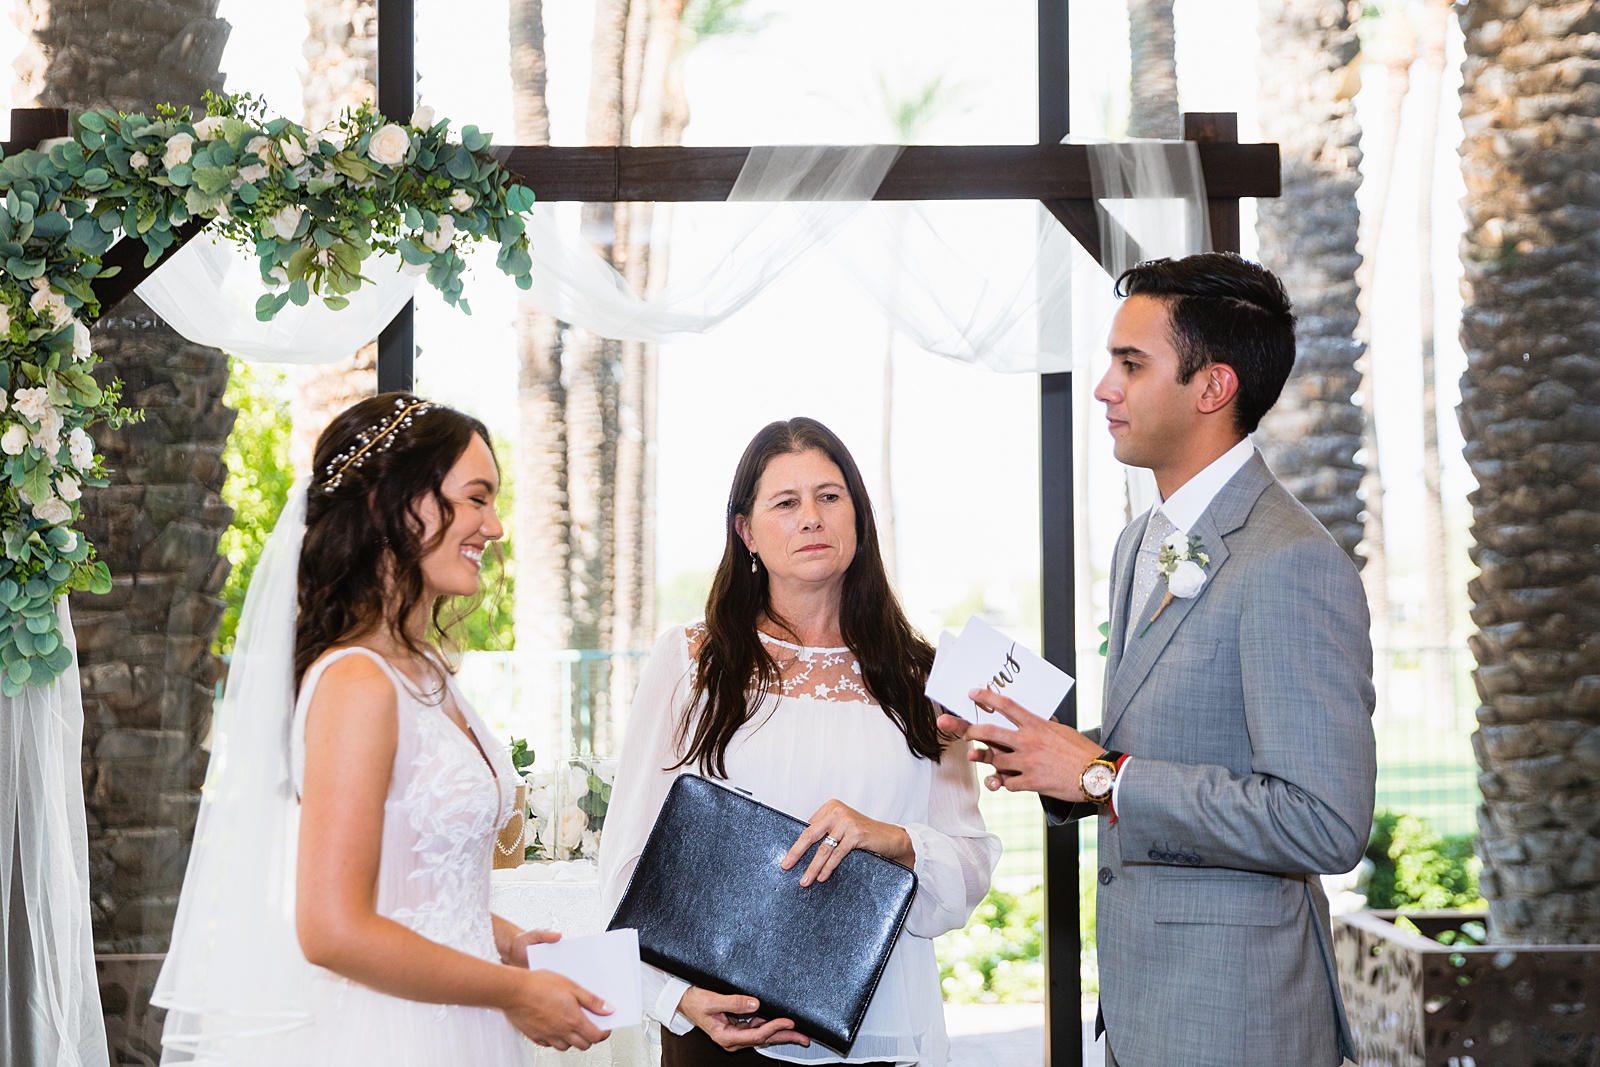 Bride and groom exchange vows during their Hyatt Regency Scottsdale Resort & Spa At Gainey Ranch wedding ceremony by Scottdsale wedding photographer PMA Photography.